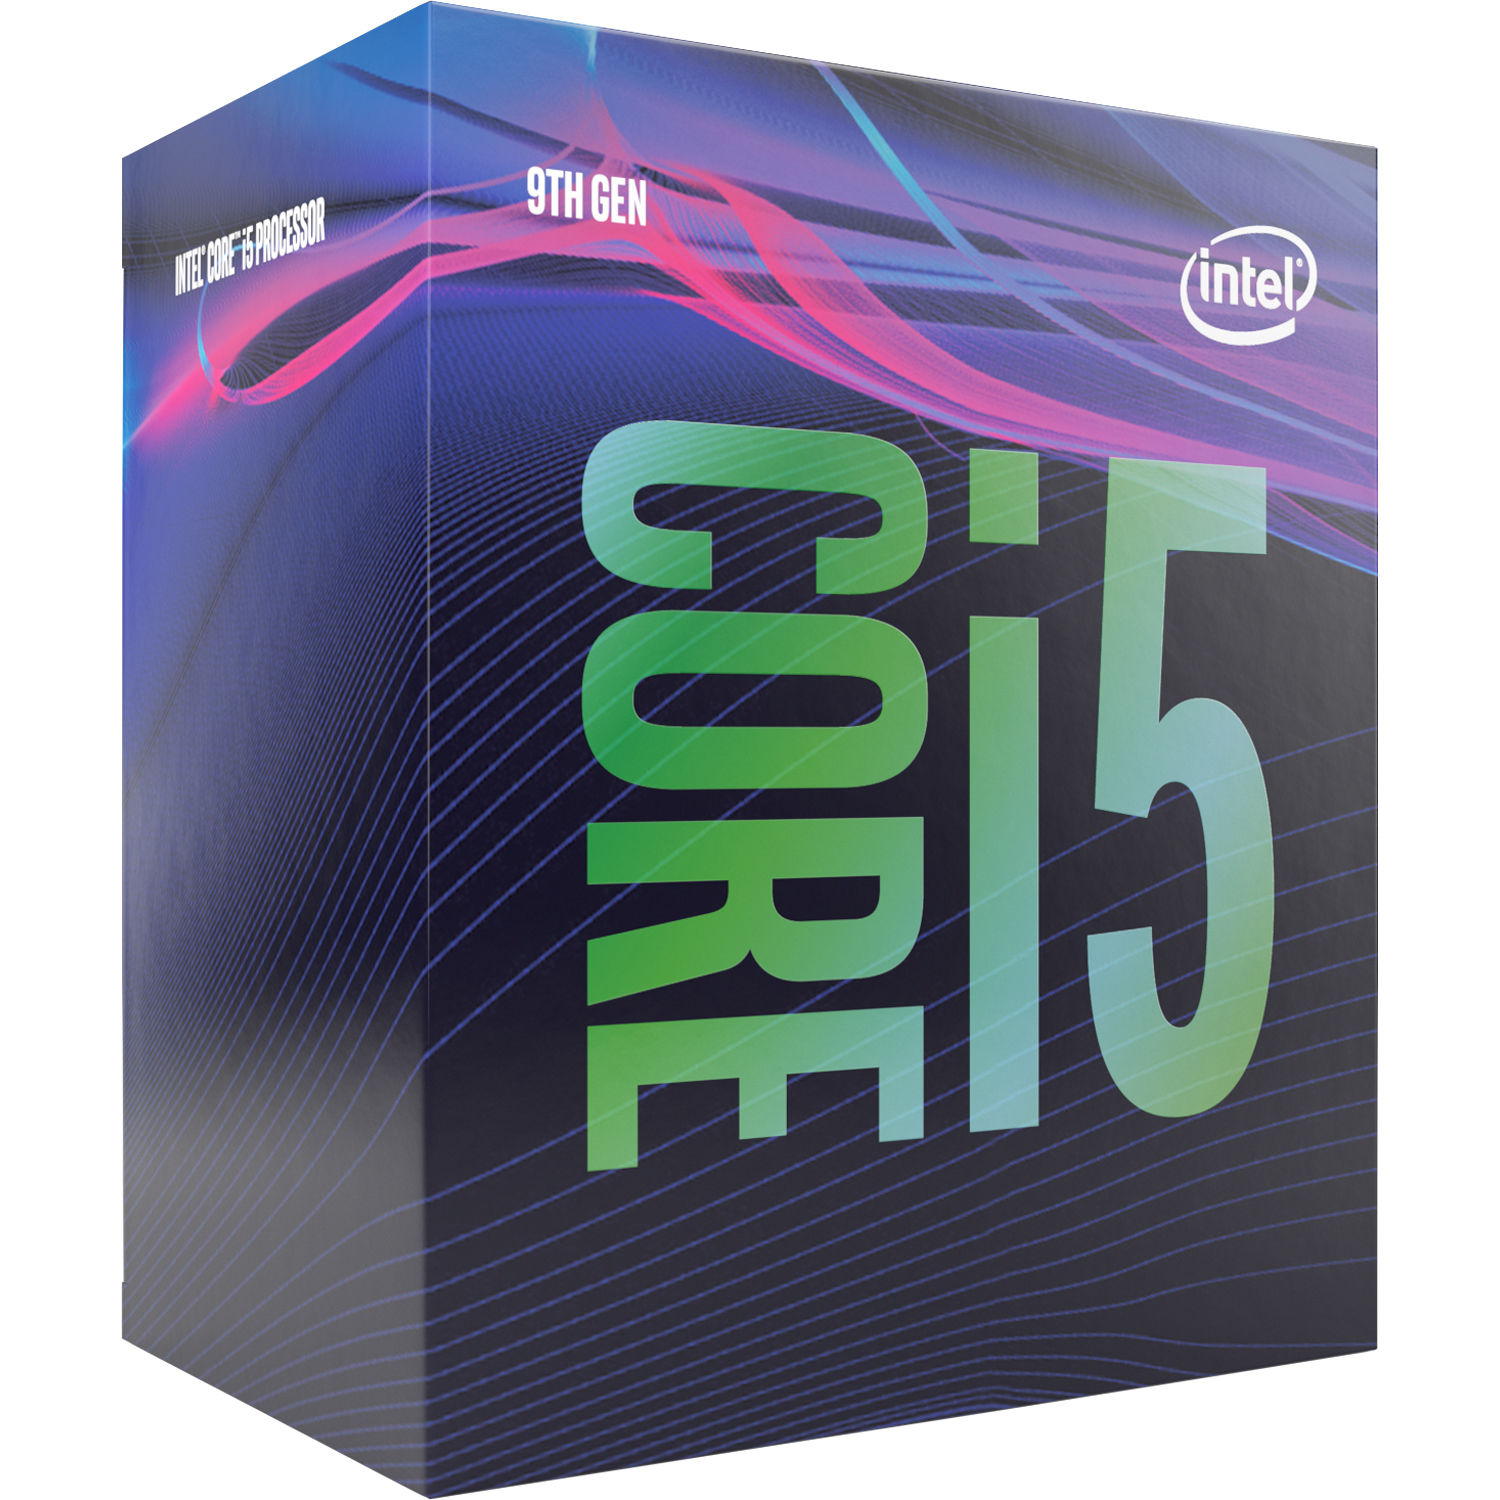 Intel Core i5 9400 2.90 GHZ, Turbo @ 4.1GHZ, 6 Core, 6 Thread, 9MB Smartcache, 65W TDP.